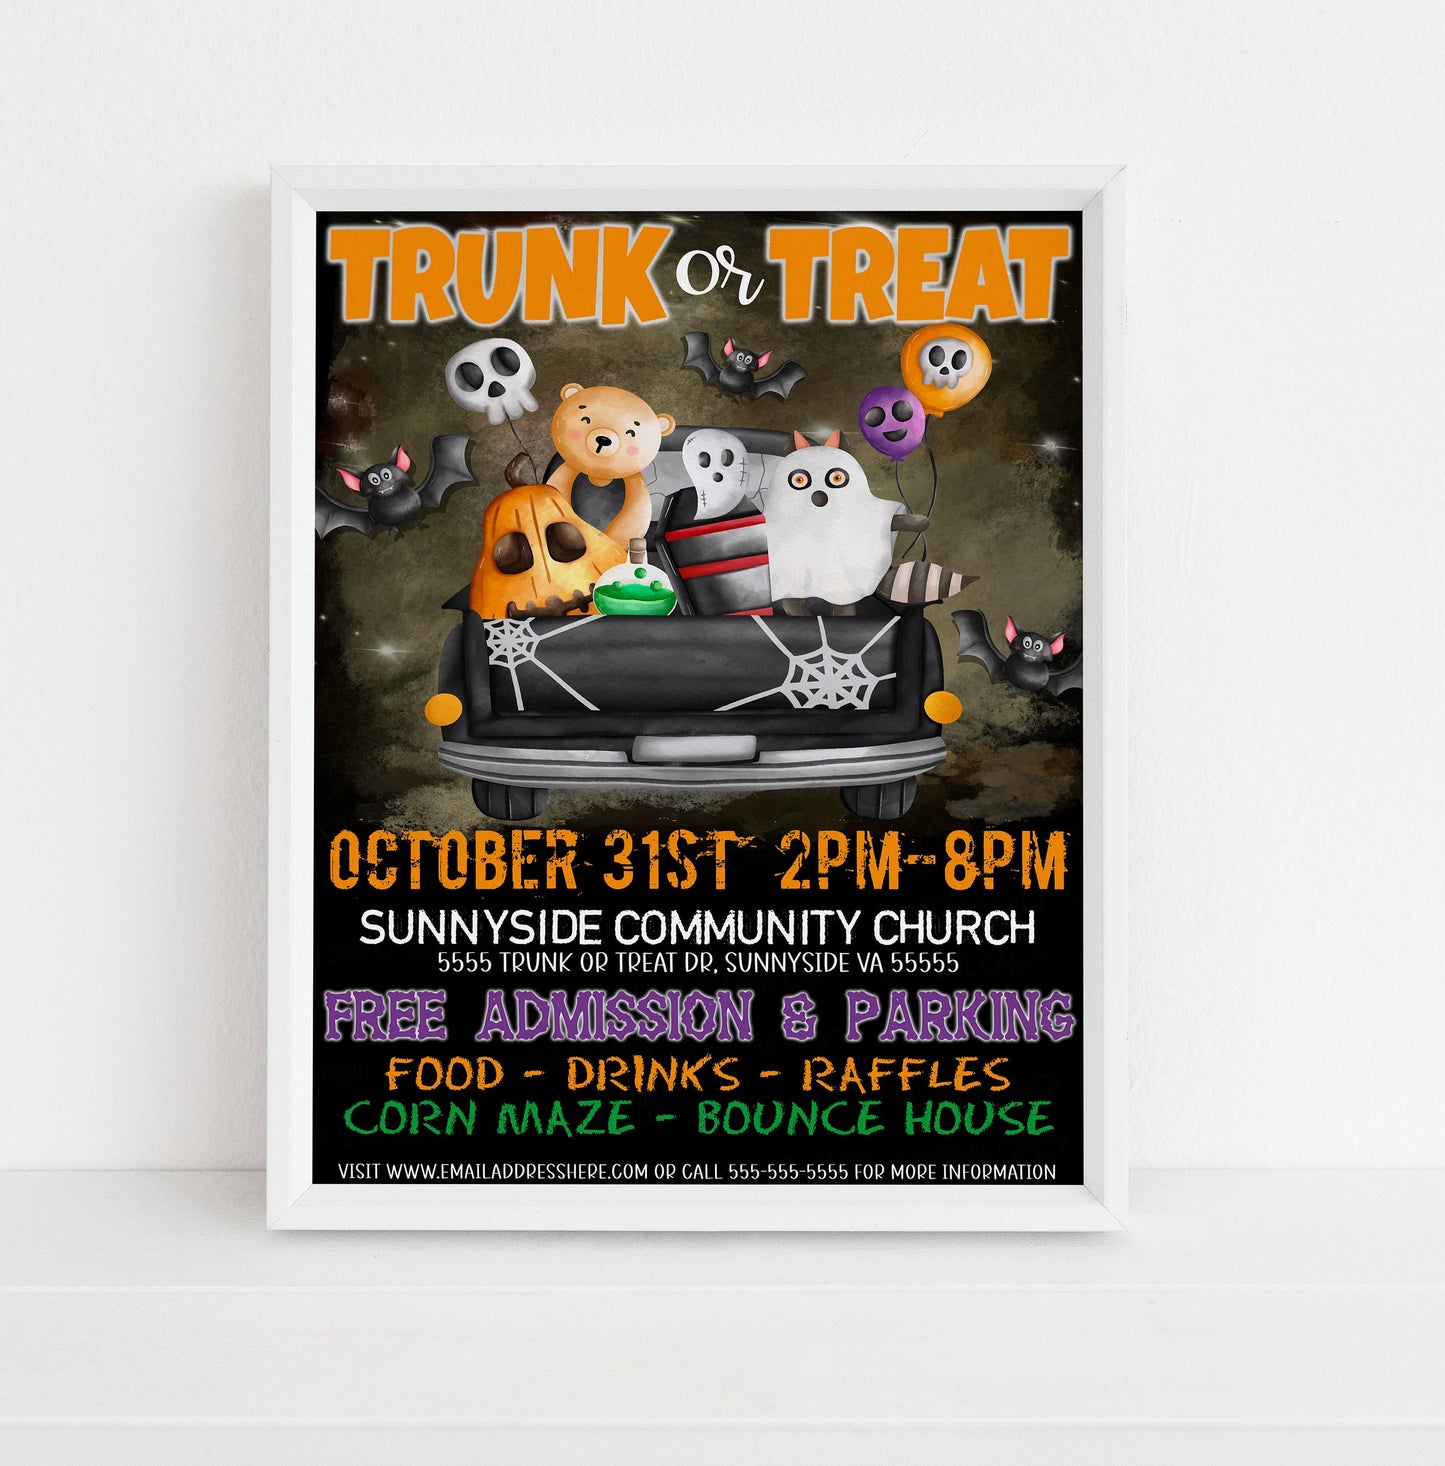 Trunk or Treat Flyer Invitation, Halloween Fall Festival Event, School Church Fundraiser Community Company Business Kids Party, PTO PTA